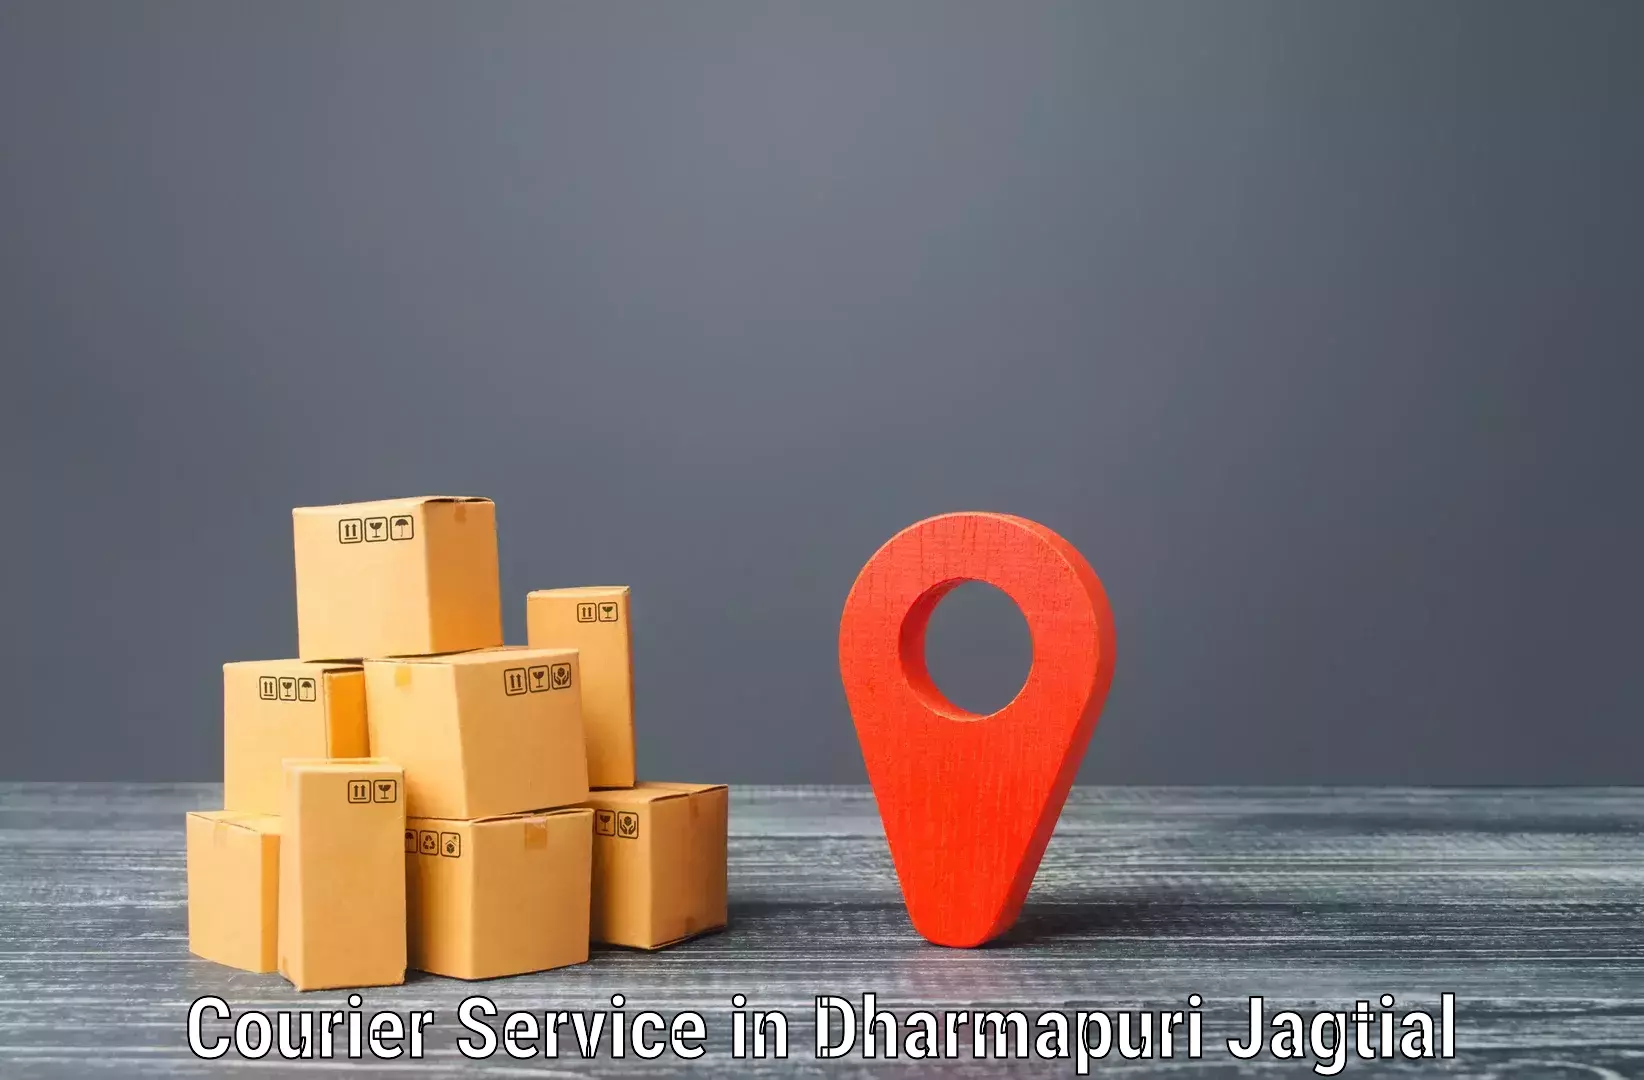 Round-the-clock parcel delivery in Dharmapuri Jagtial